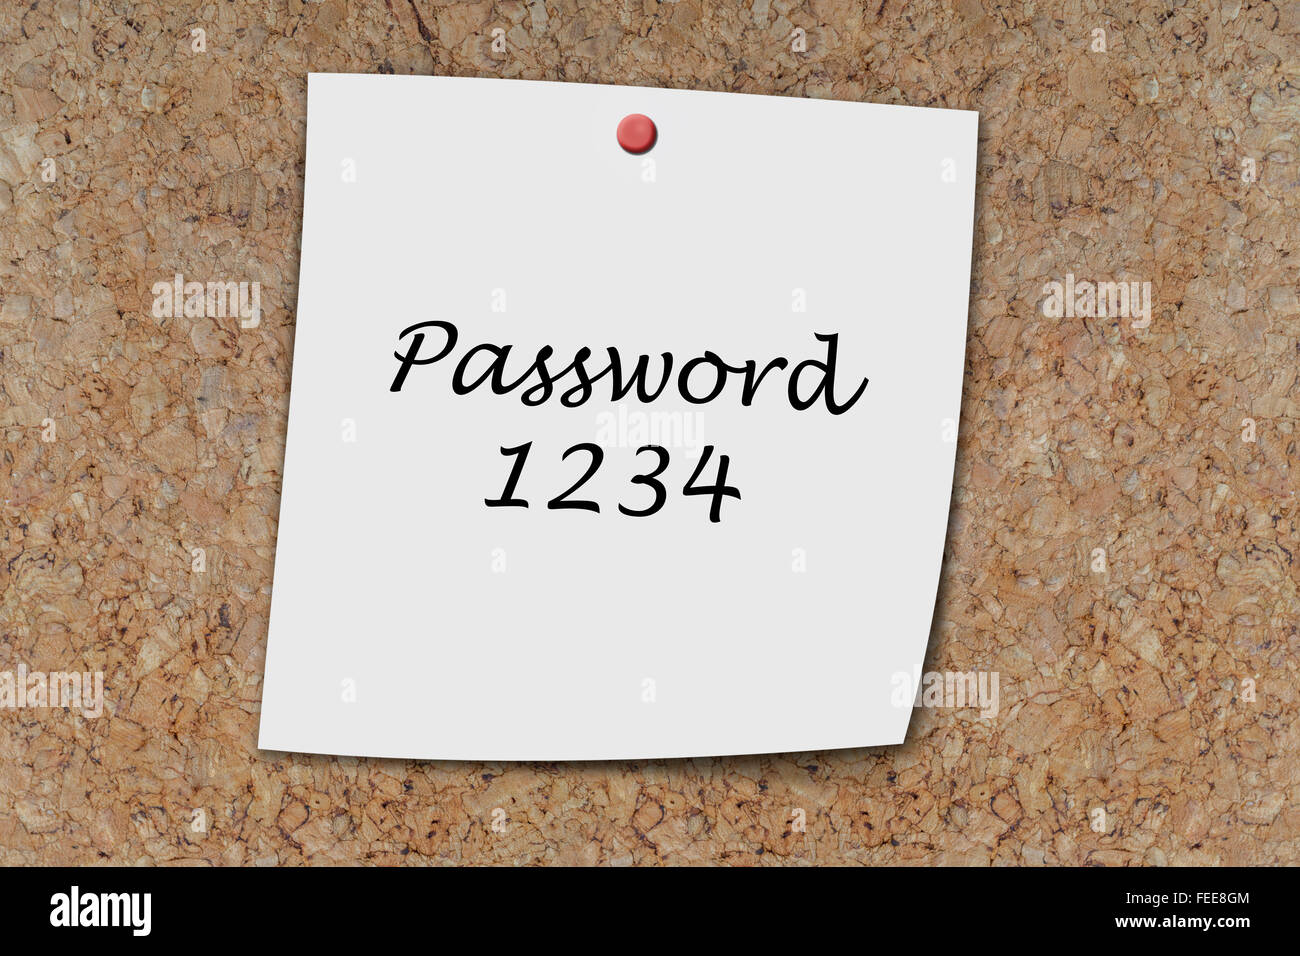 Password 1234 written on a memo pinned on a cork board Stock Photo